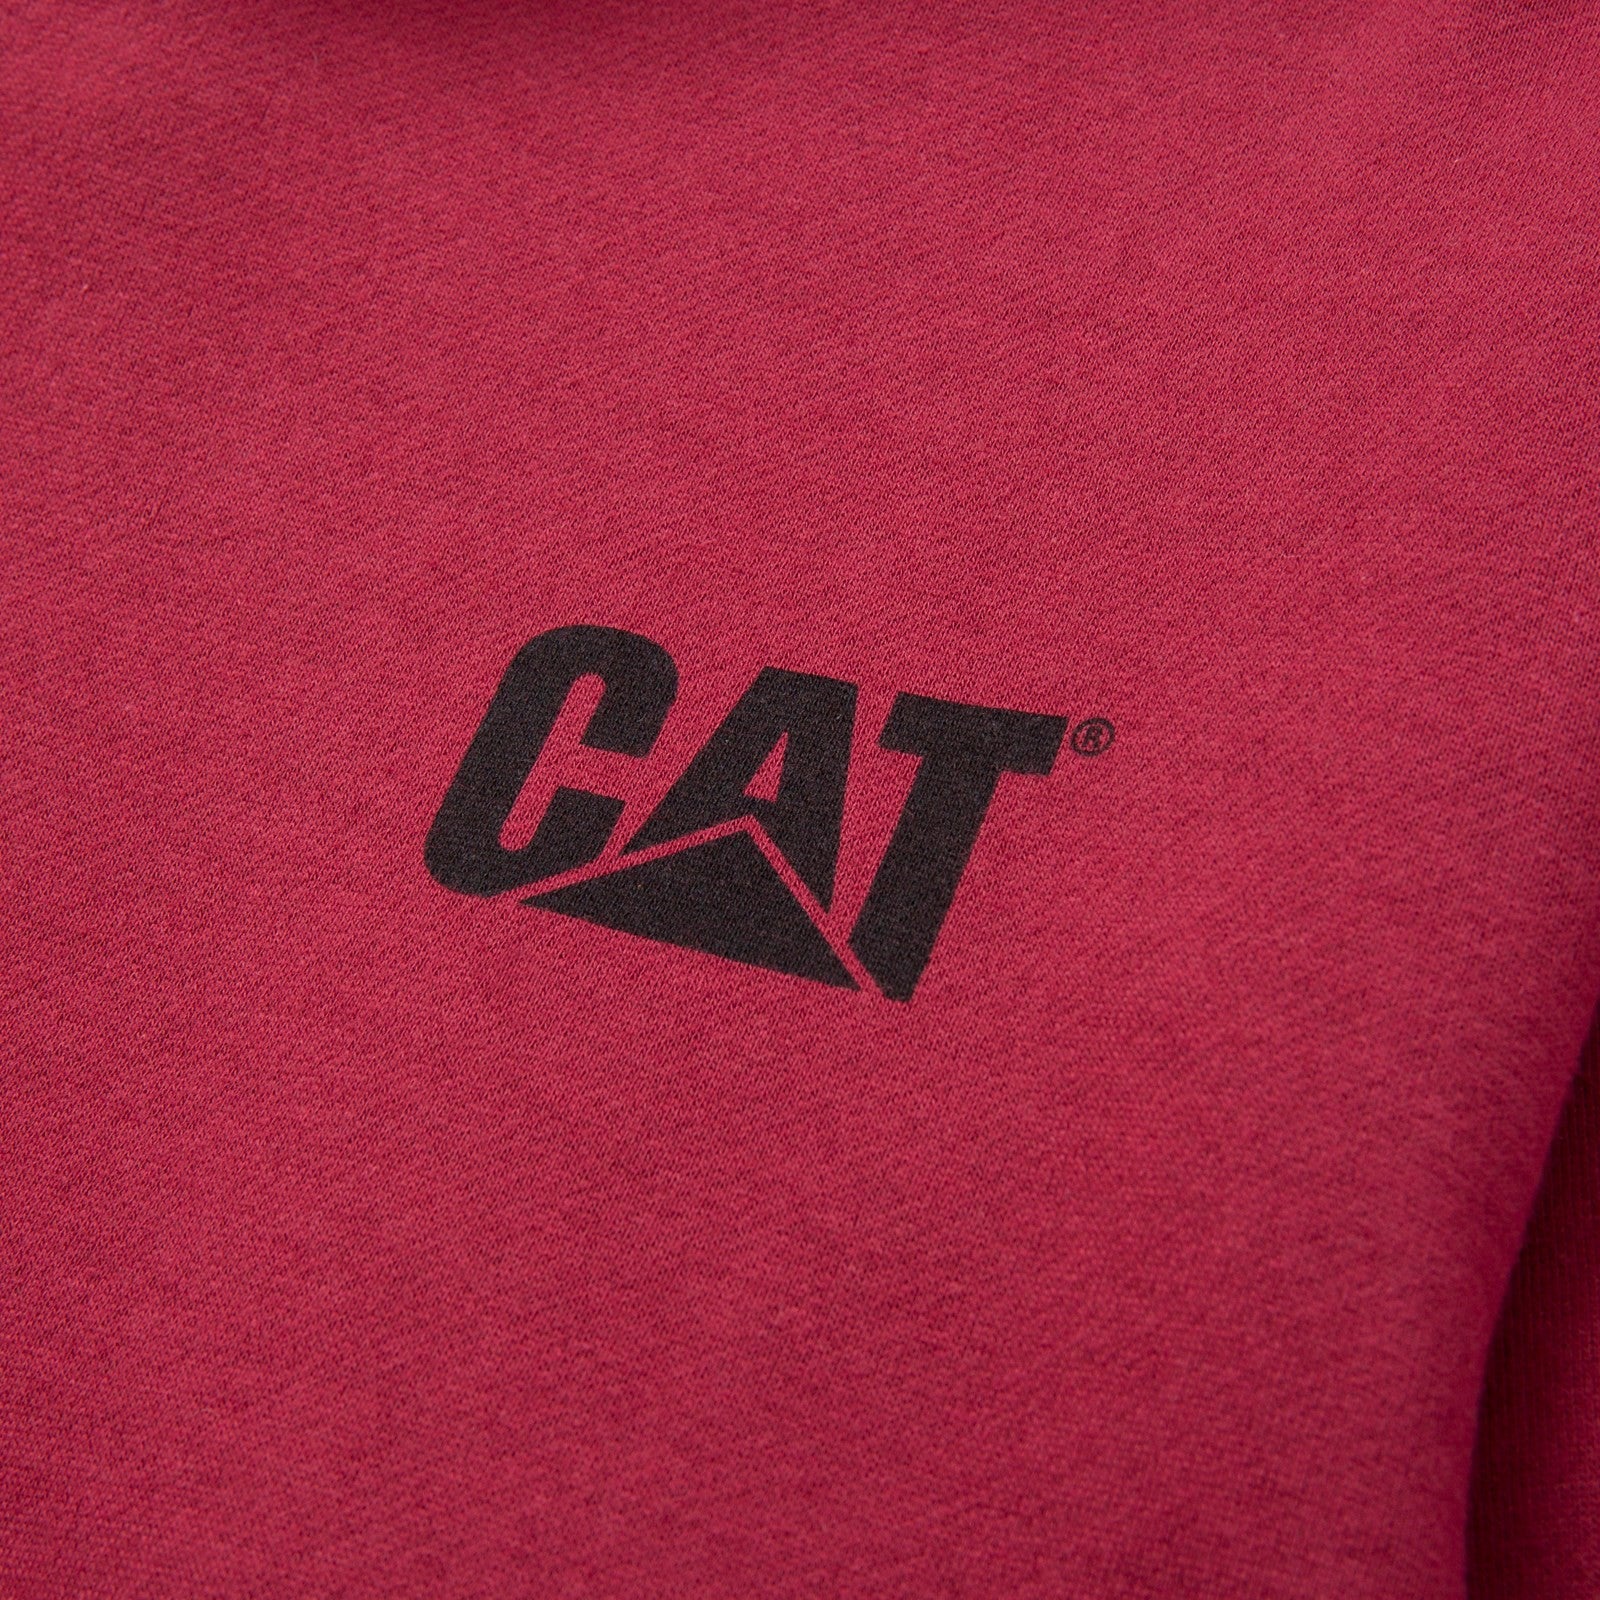 Caterpillar Trademark Banner Hooded Sweatshirt